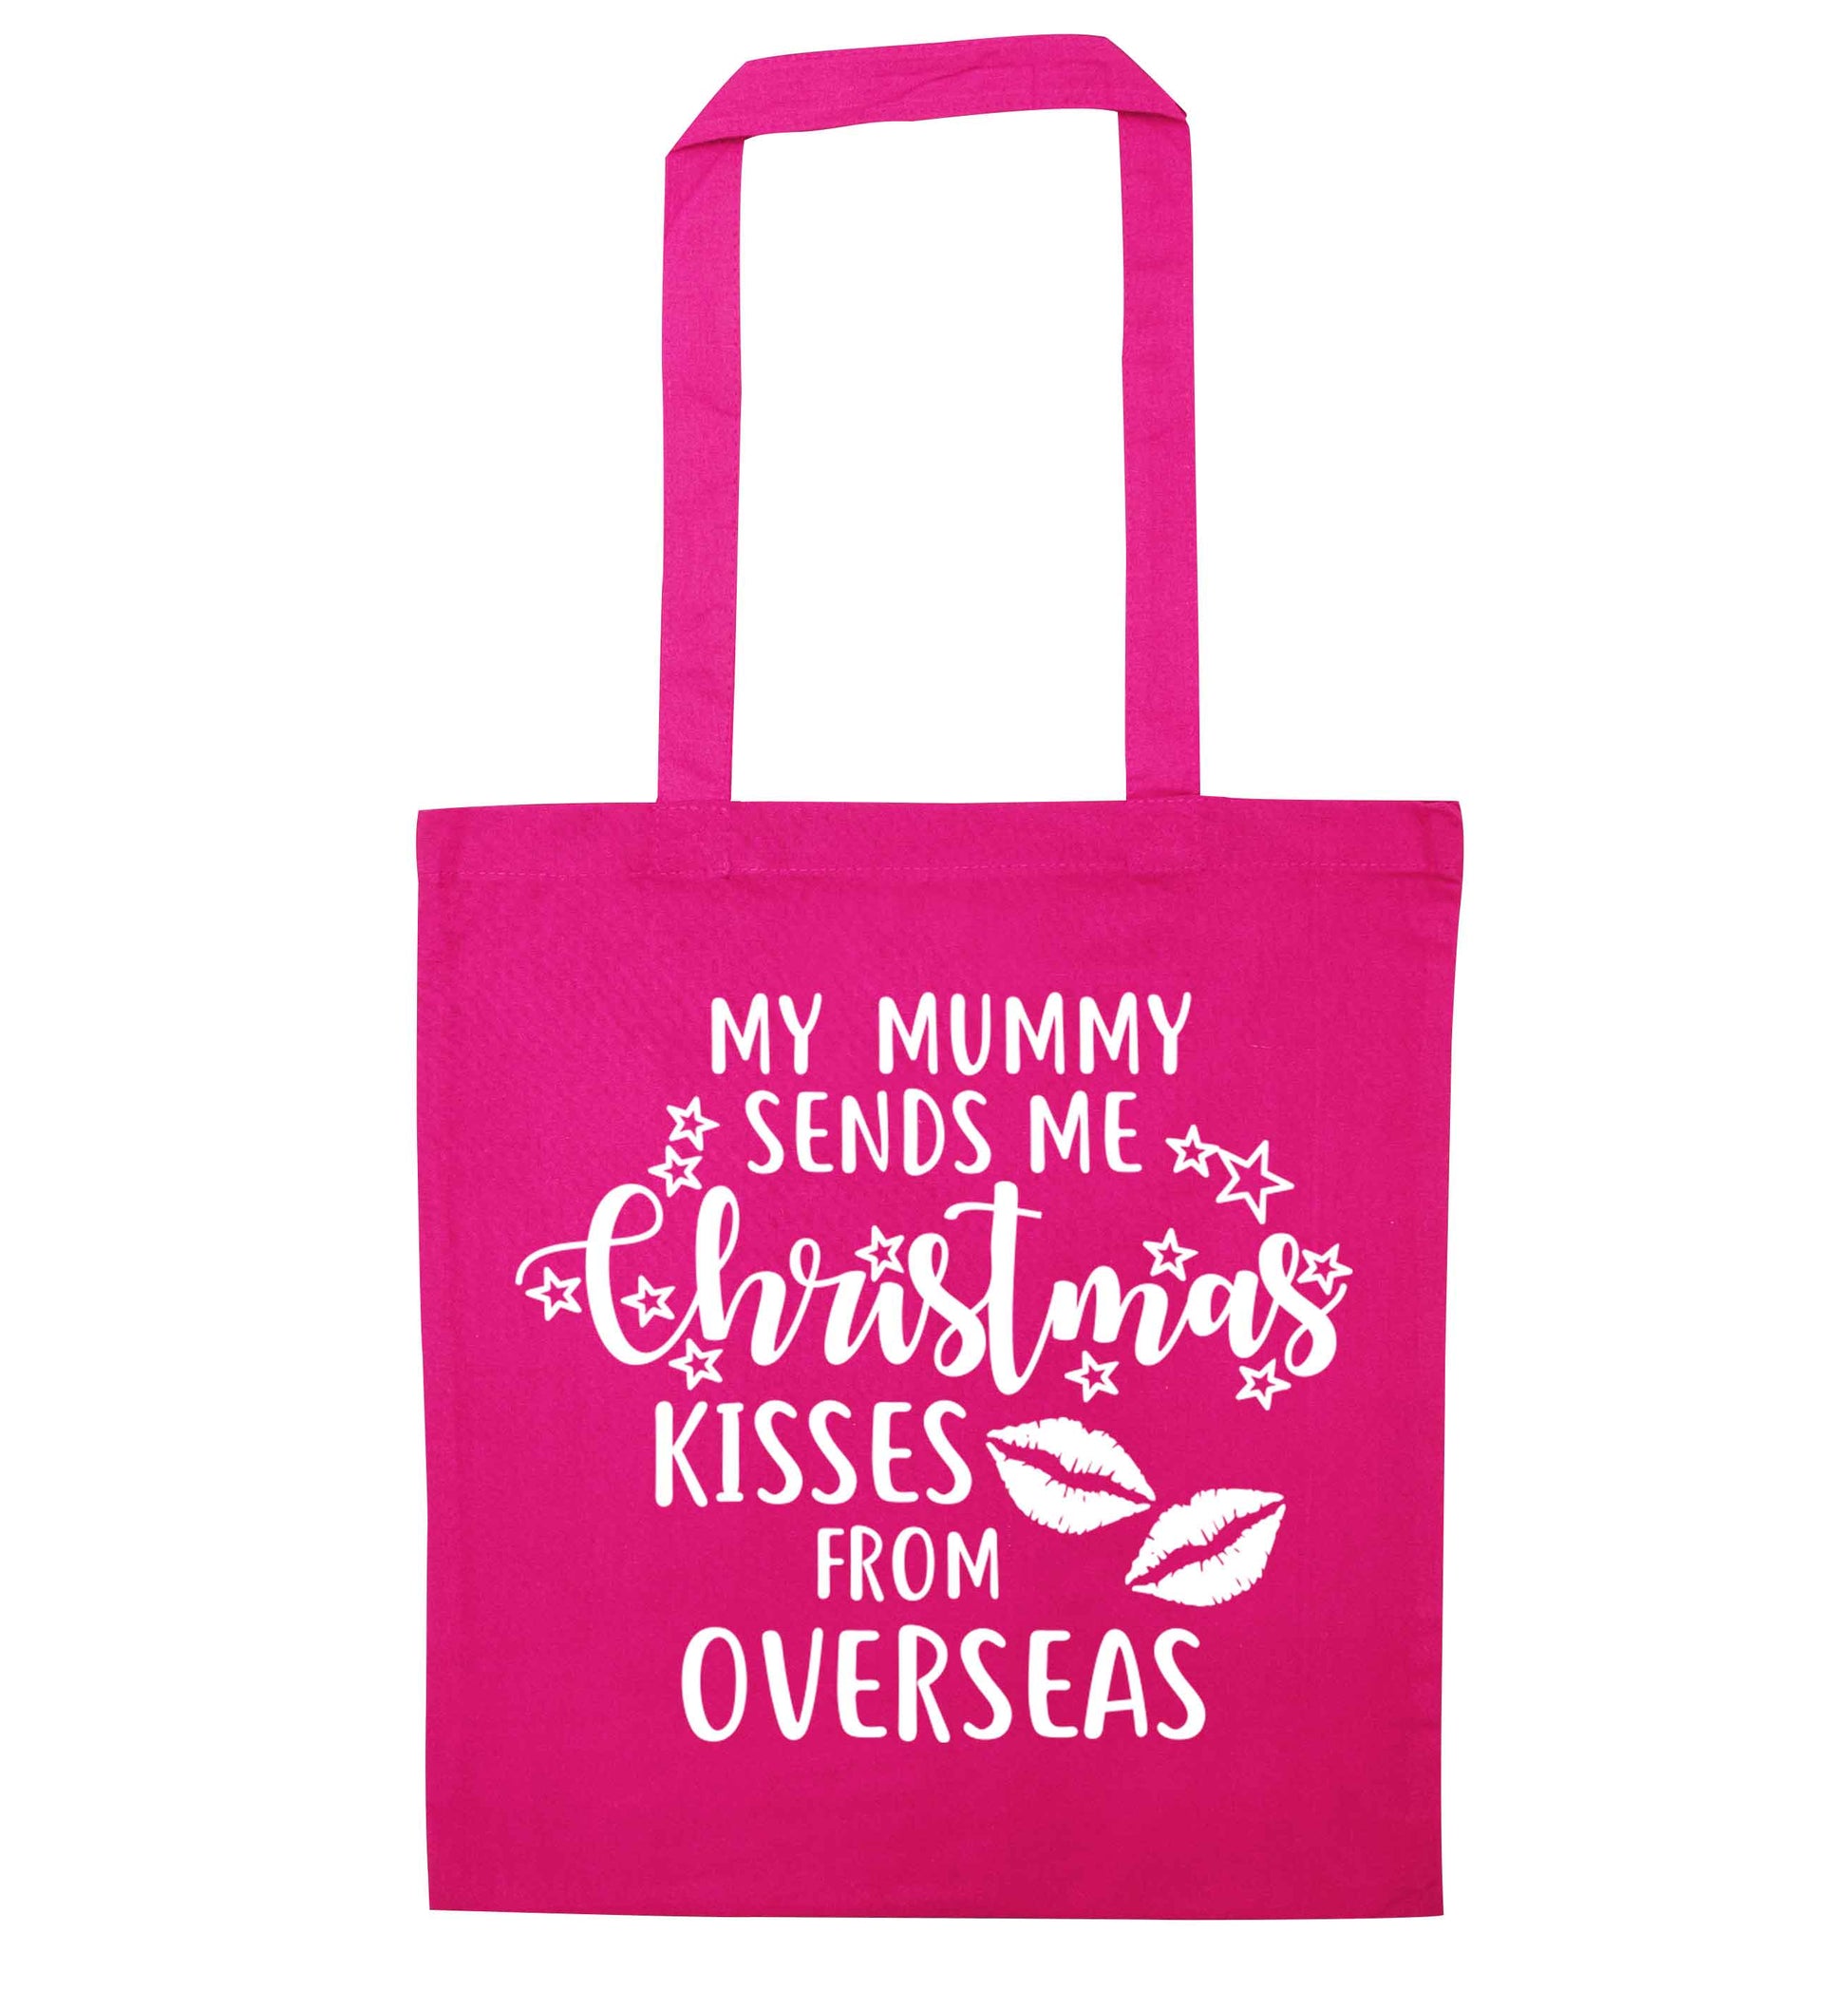 Mummy Christmas Kisses Overseas pink tote bag